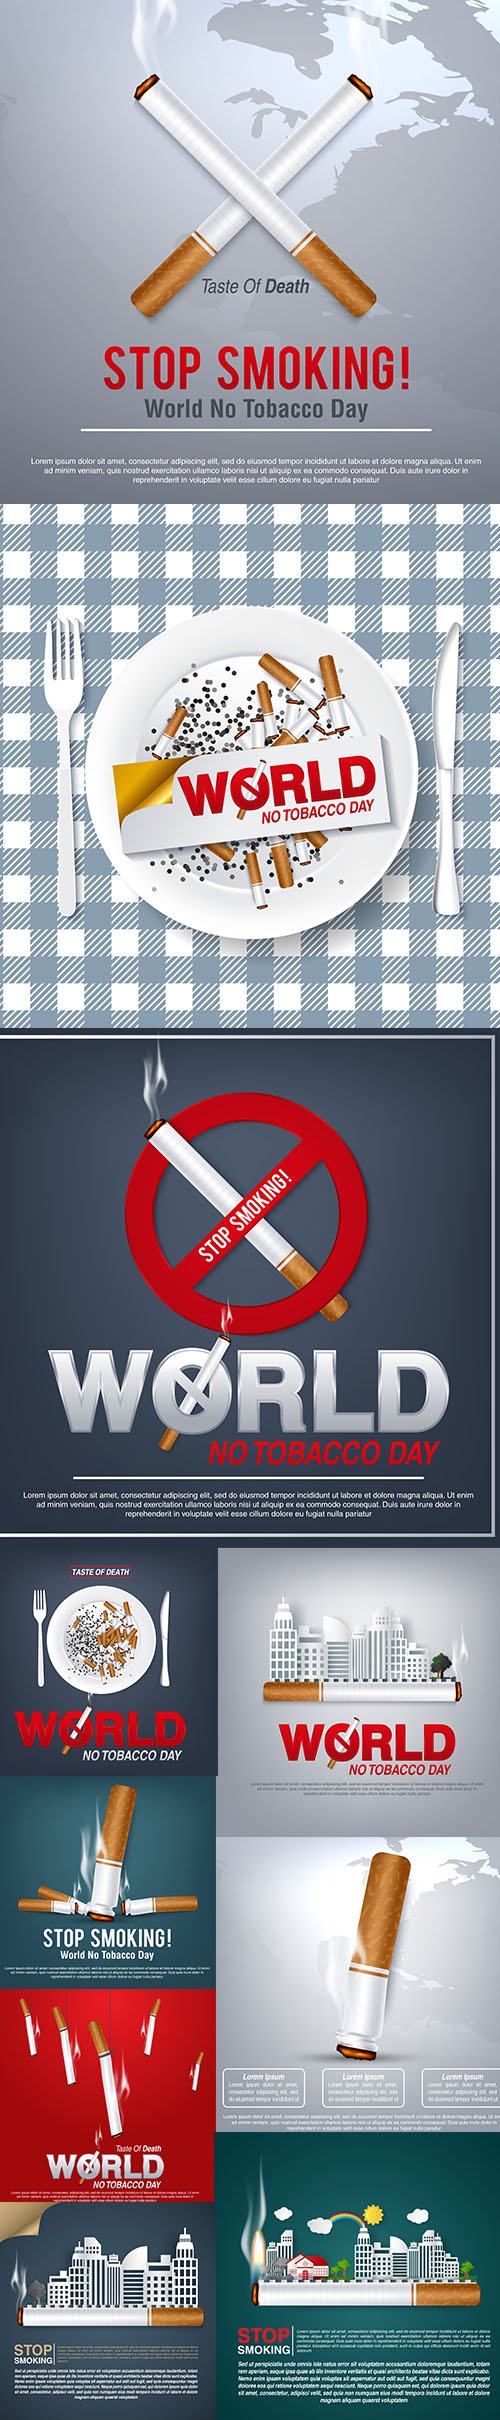 World NO Tobacco Day Stop Smoking